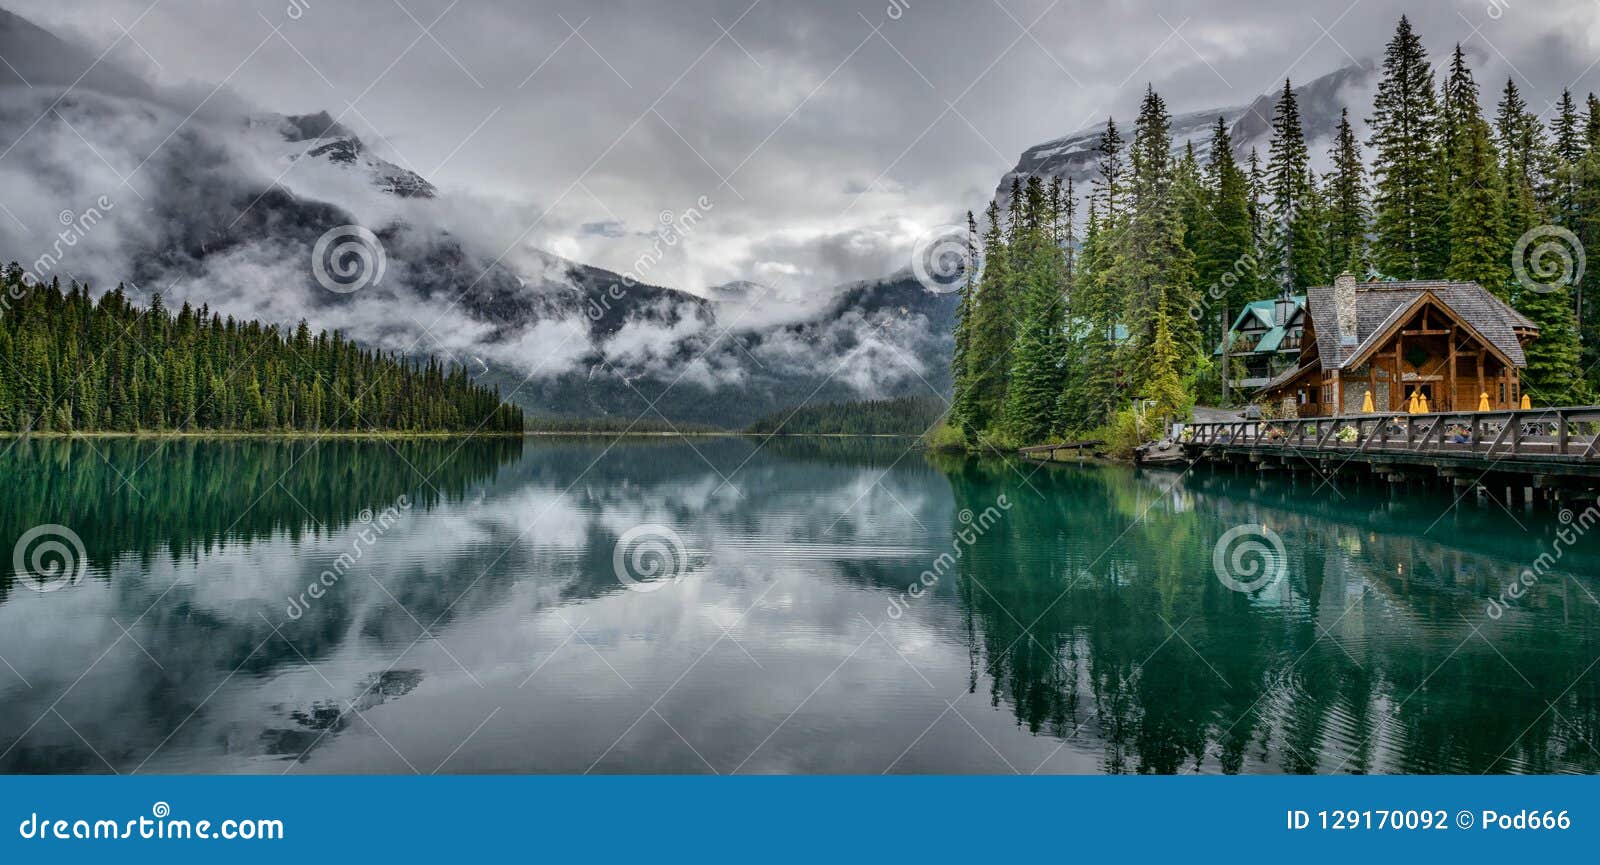 emerald lake yoho national park british columbia canada